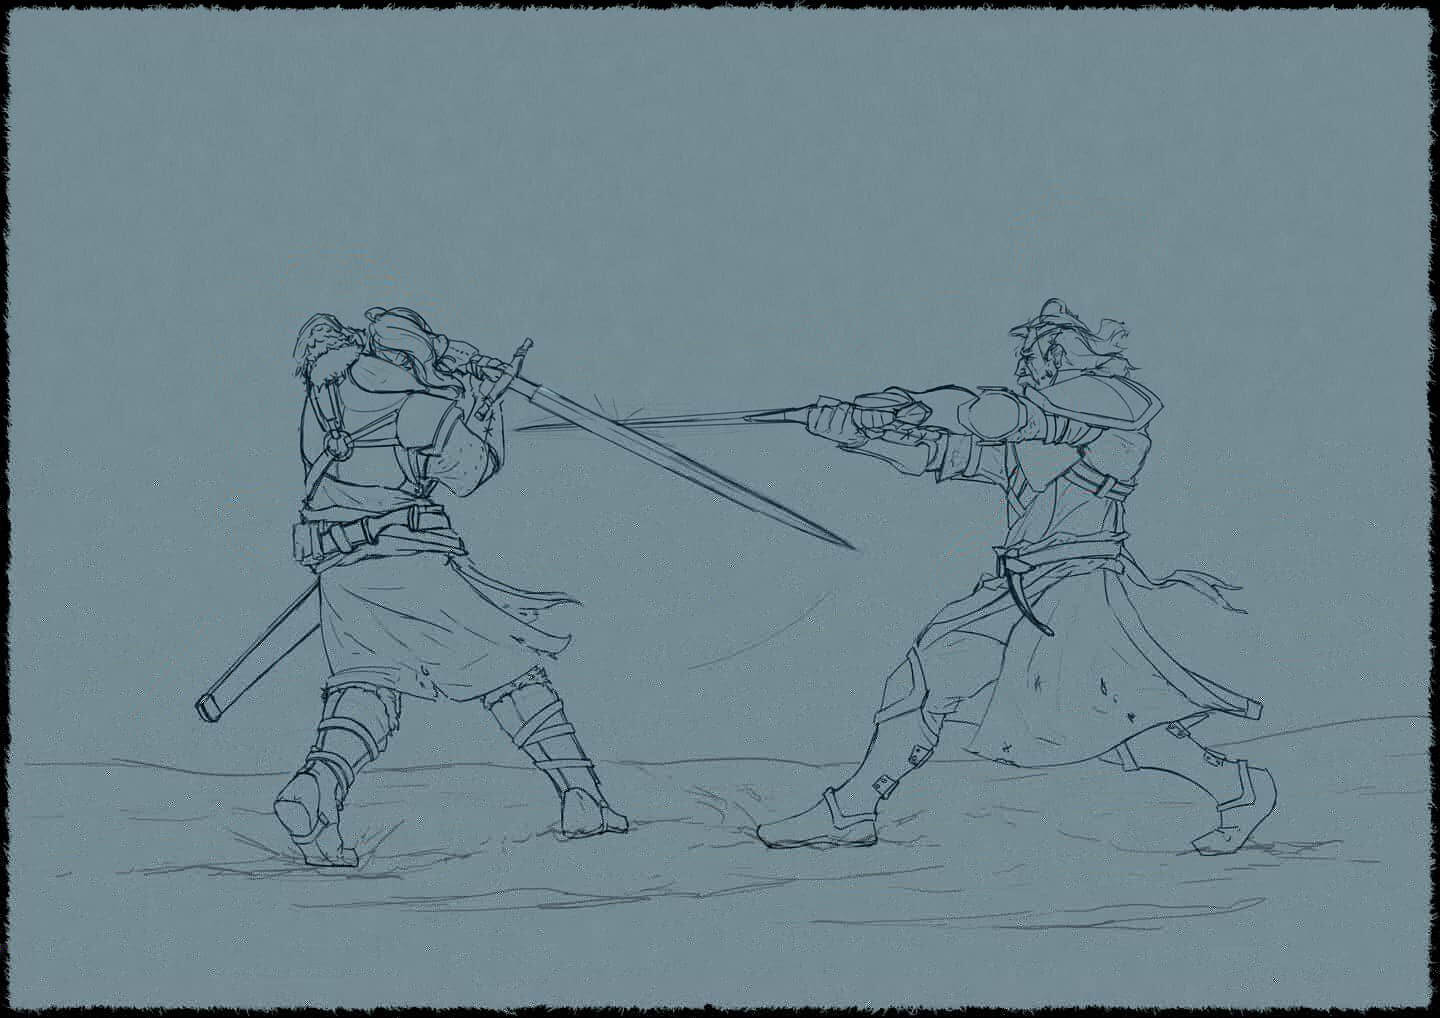 sword fight